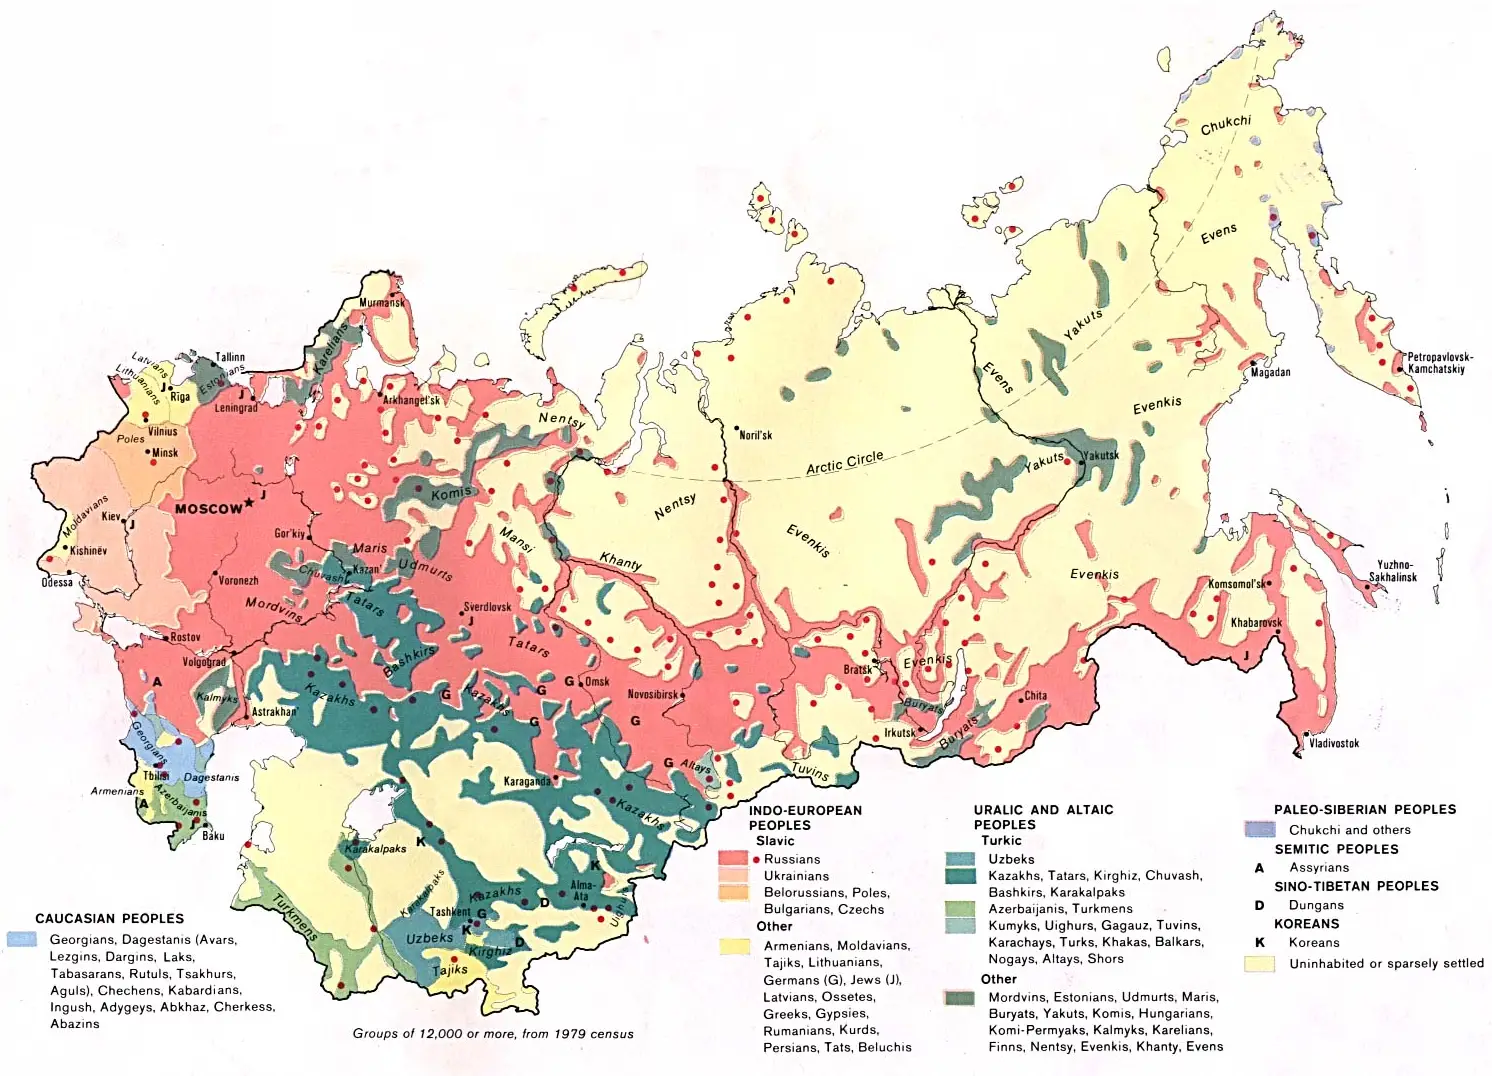 Ethnic plurality in Russia